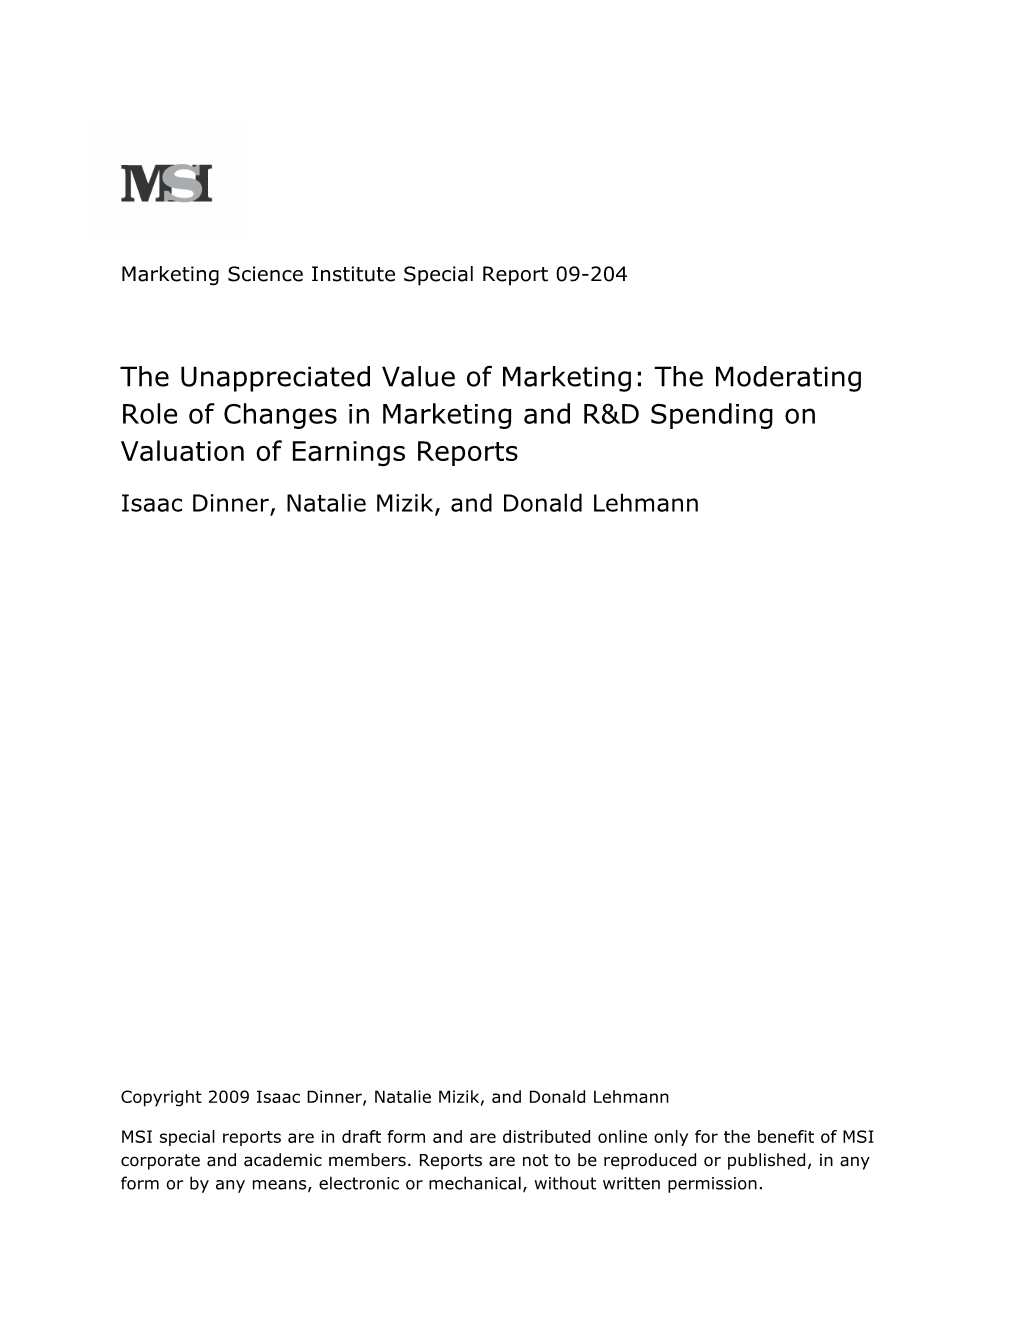 The Unappreciated Value of Marketing Metrics